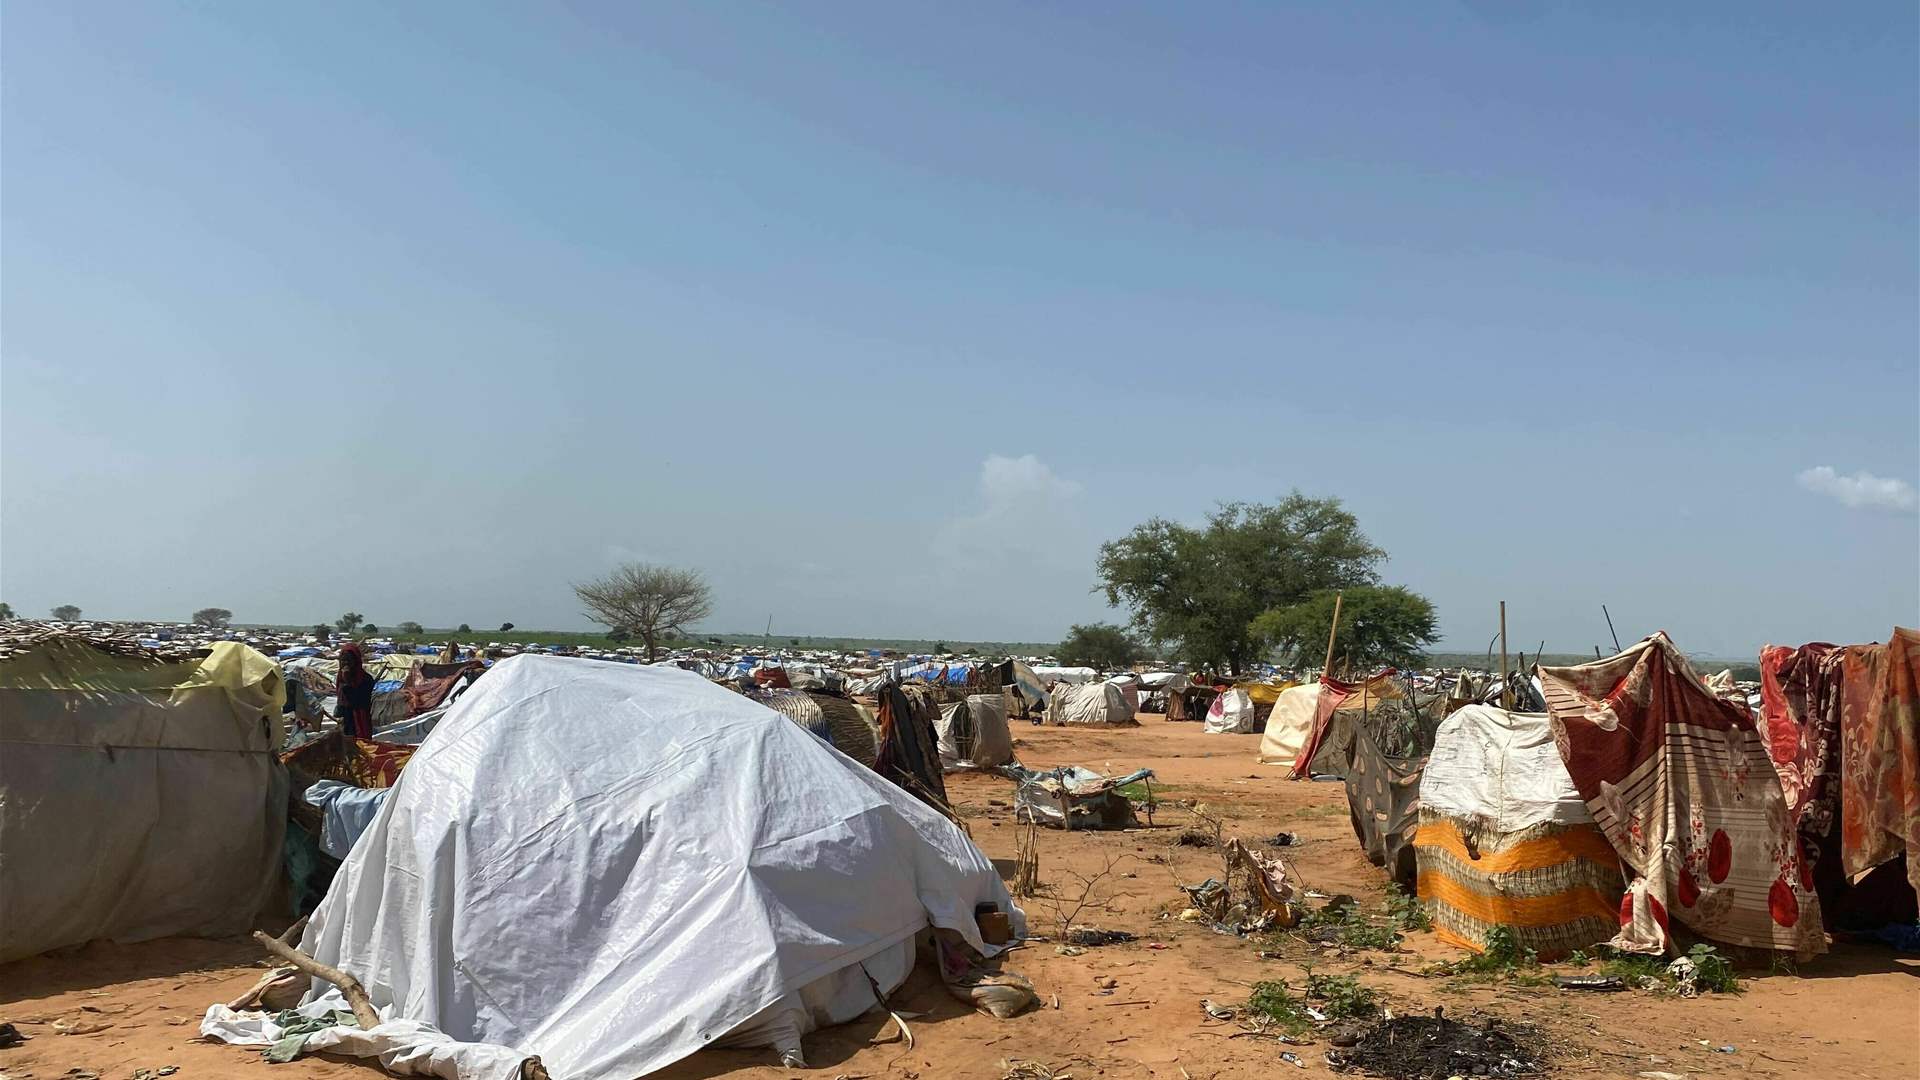 UN seeks help for thousands of Sudan refugees fleeing to Libya, Uganda